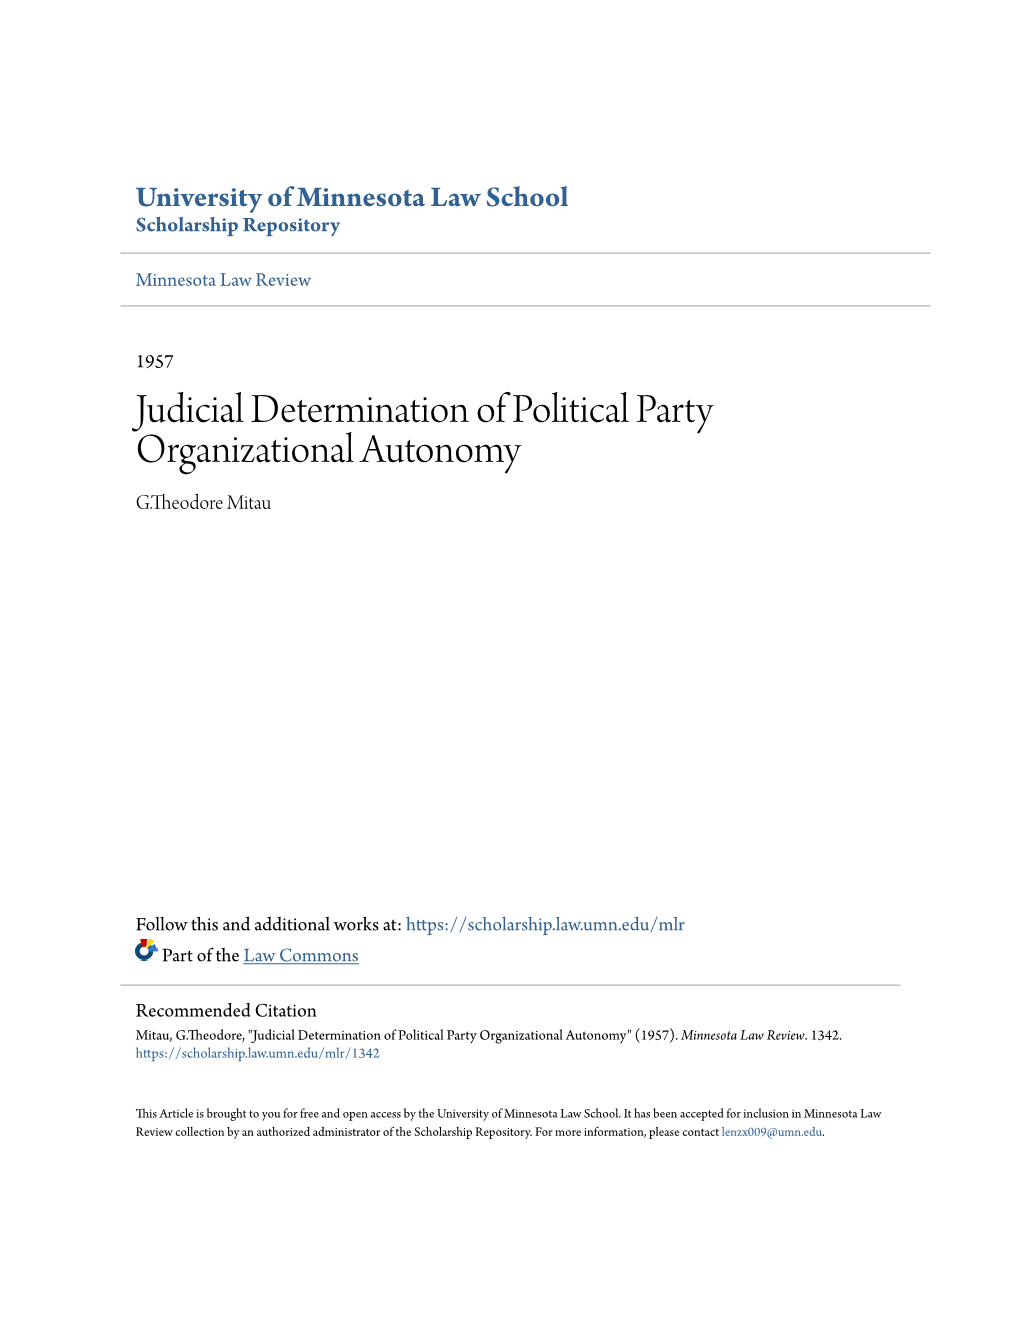 Judicial Determination of Political Party Organizational Autonomy G.Theodore Mitau